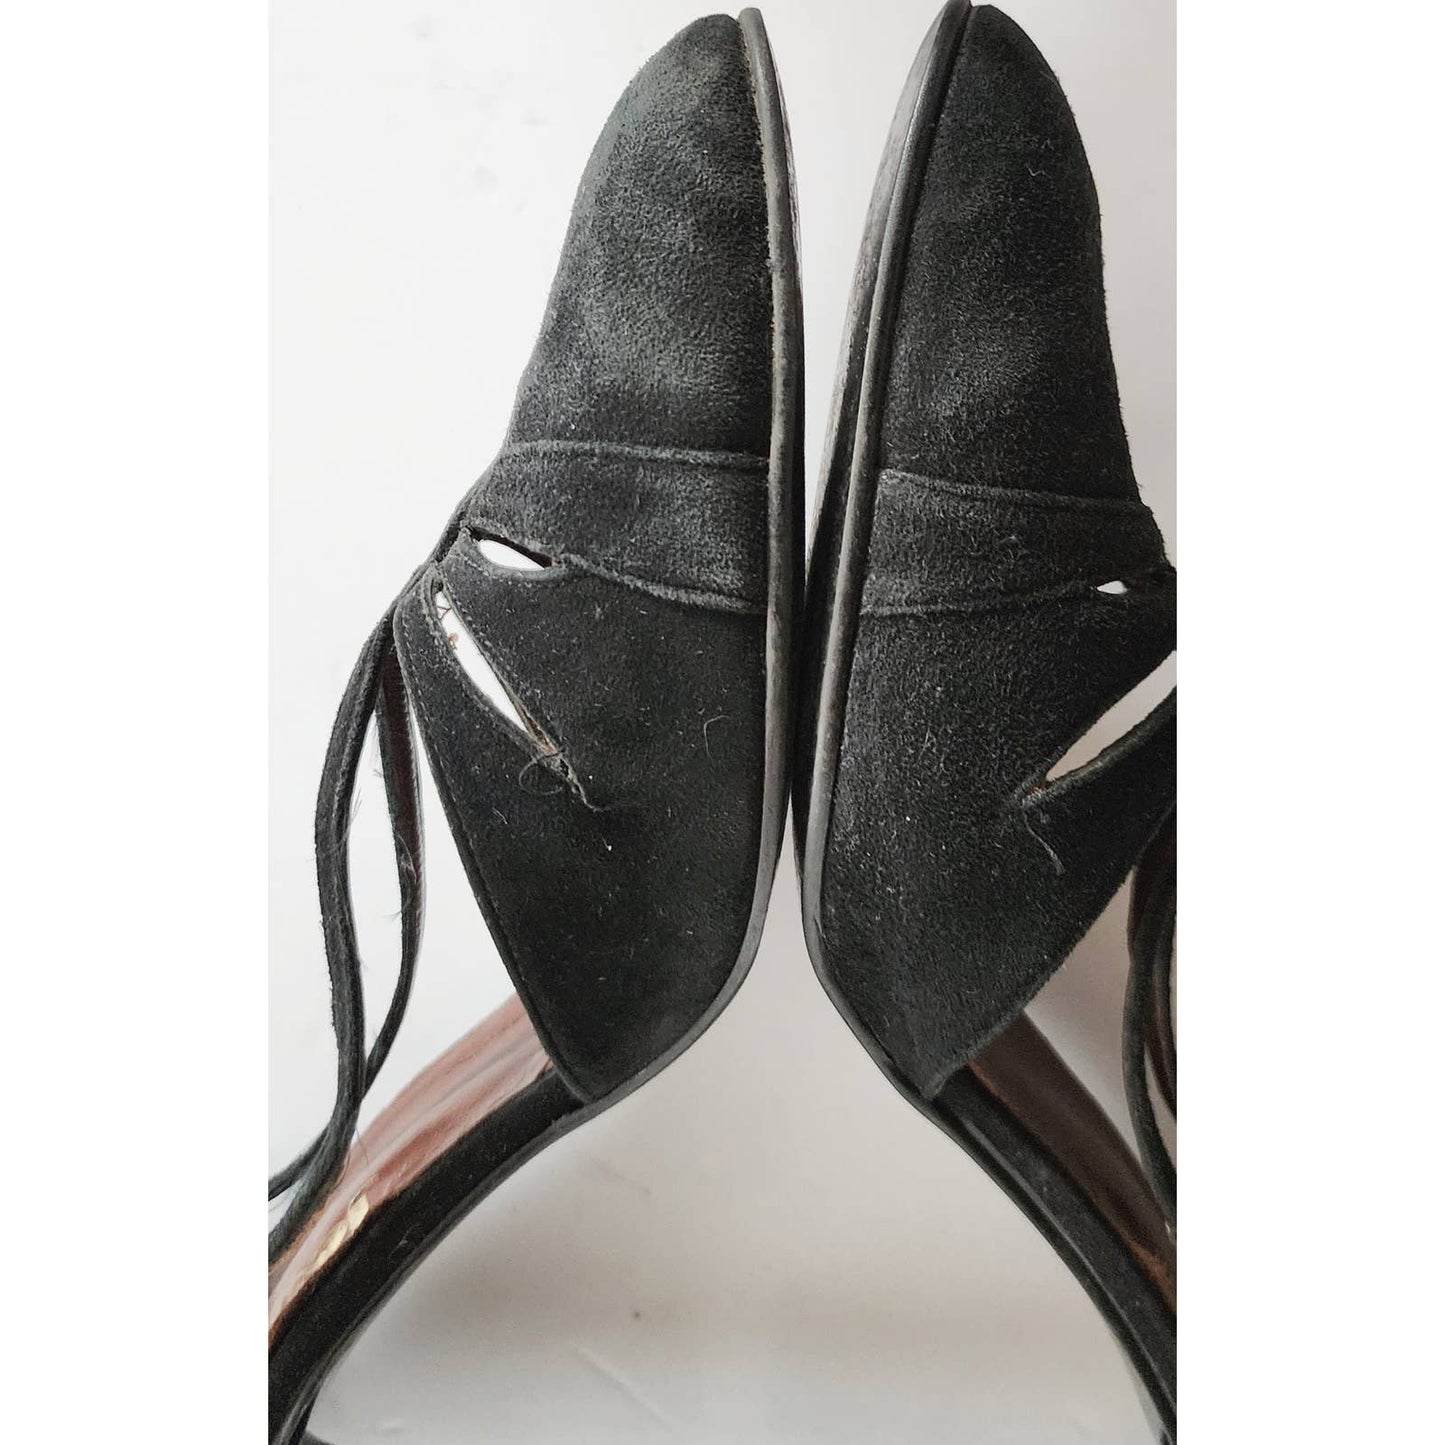 Vintage 50s Black Shoes T-Straps High Heels Joyce California Size 11